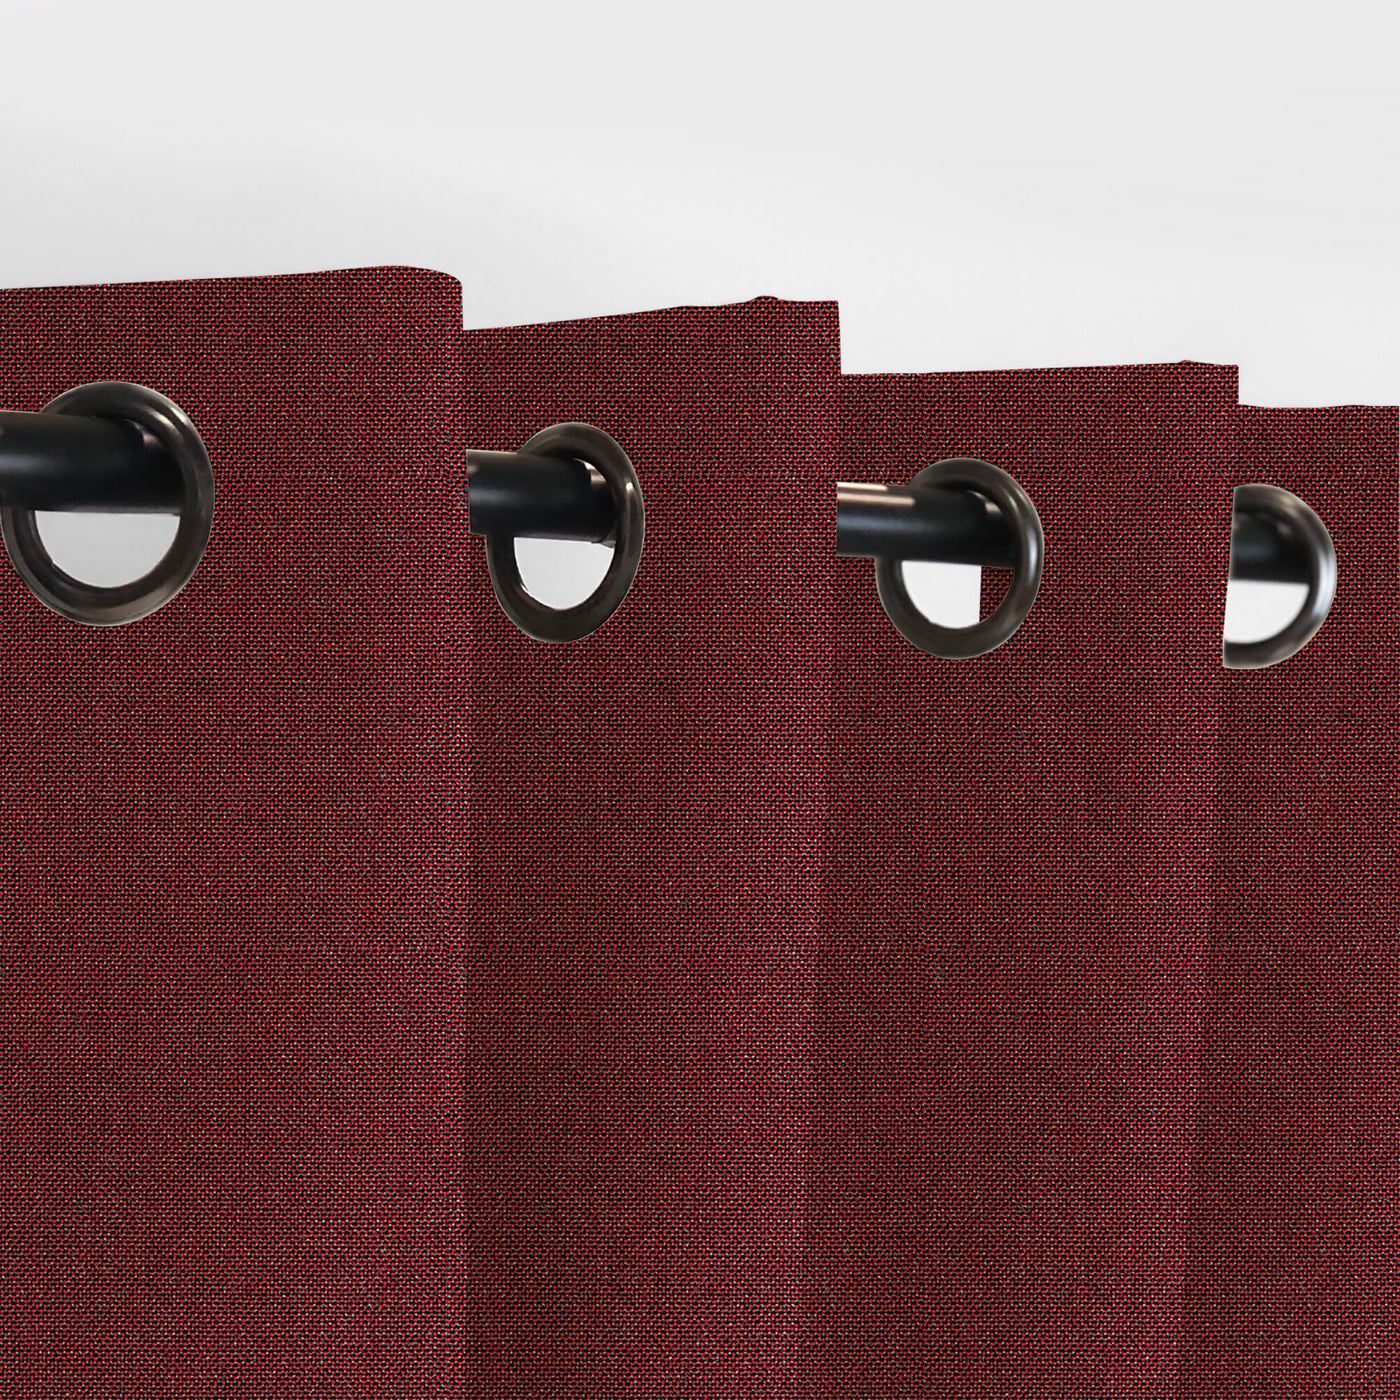 PENGI Outdoor Curtains Waterproof - Blend Oxblood Red